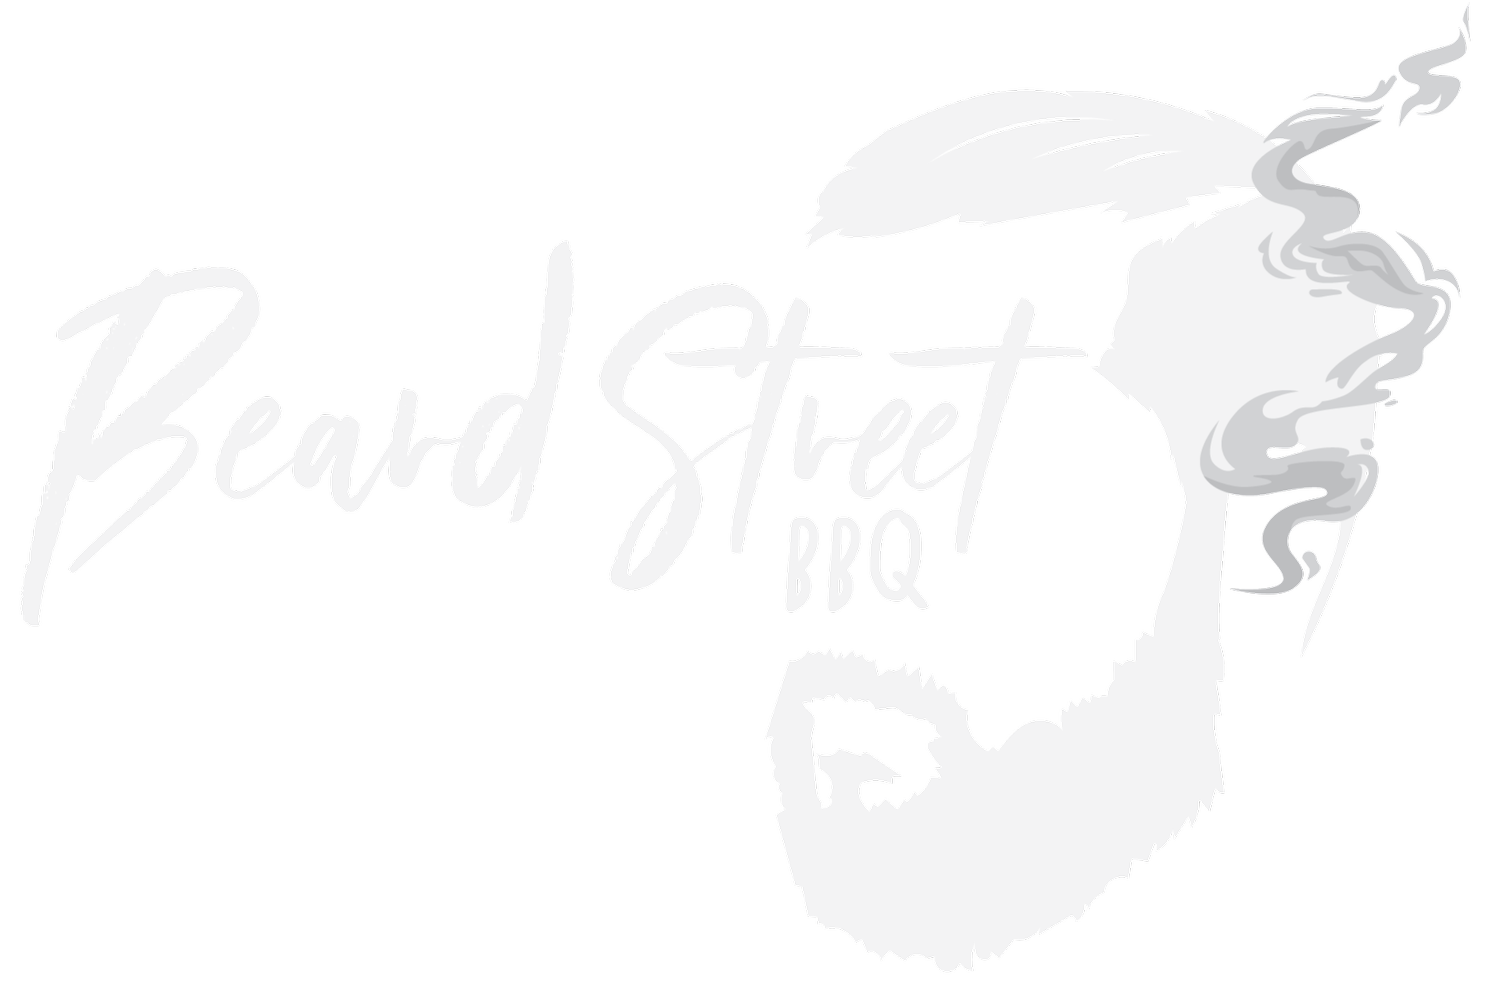 Beard Street BBQ